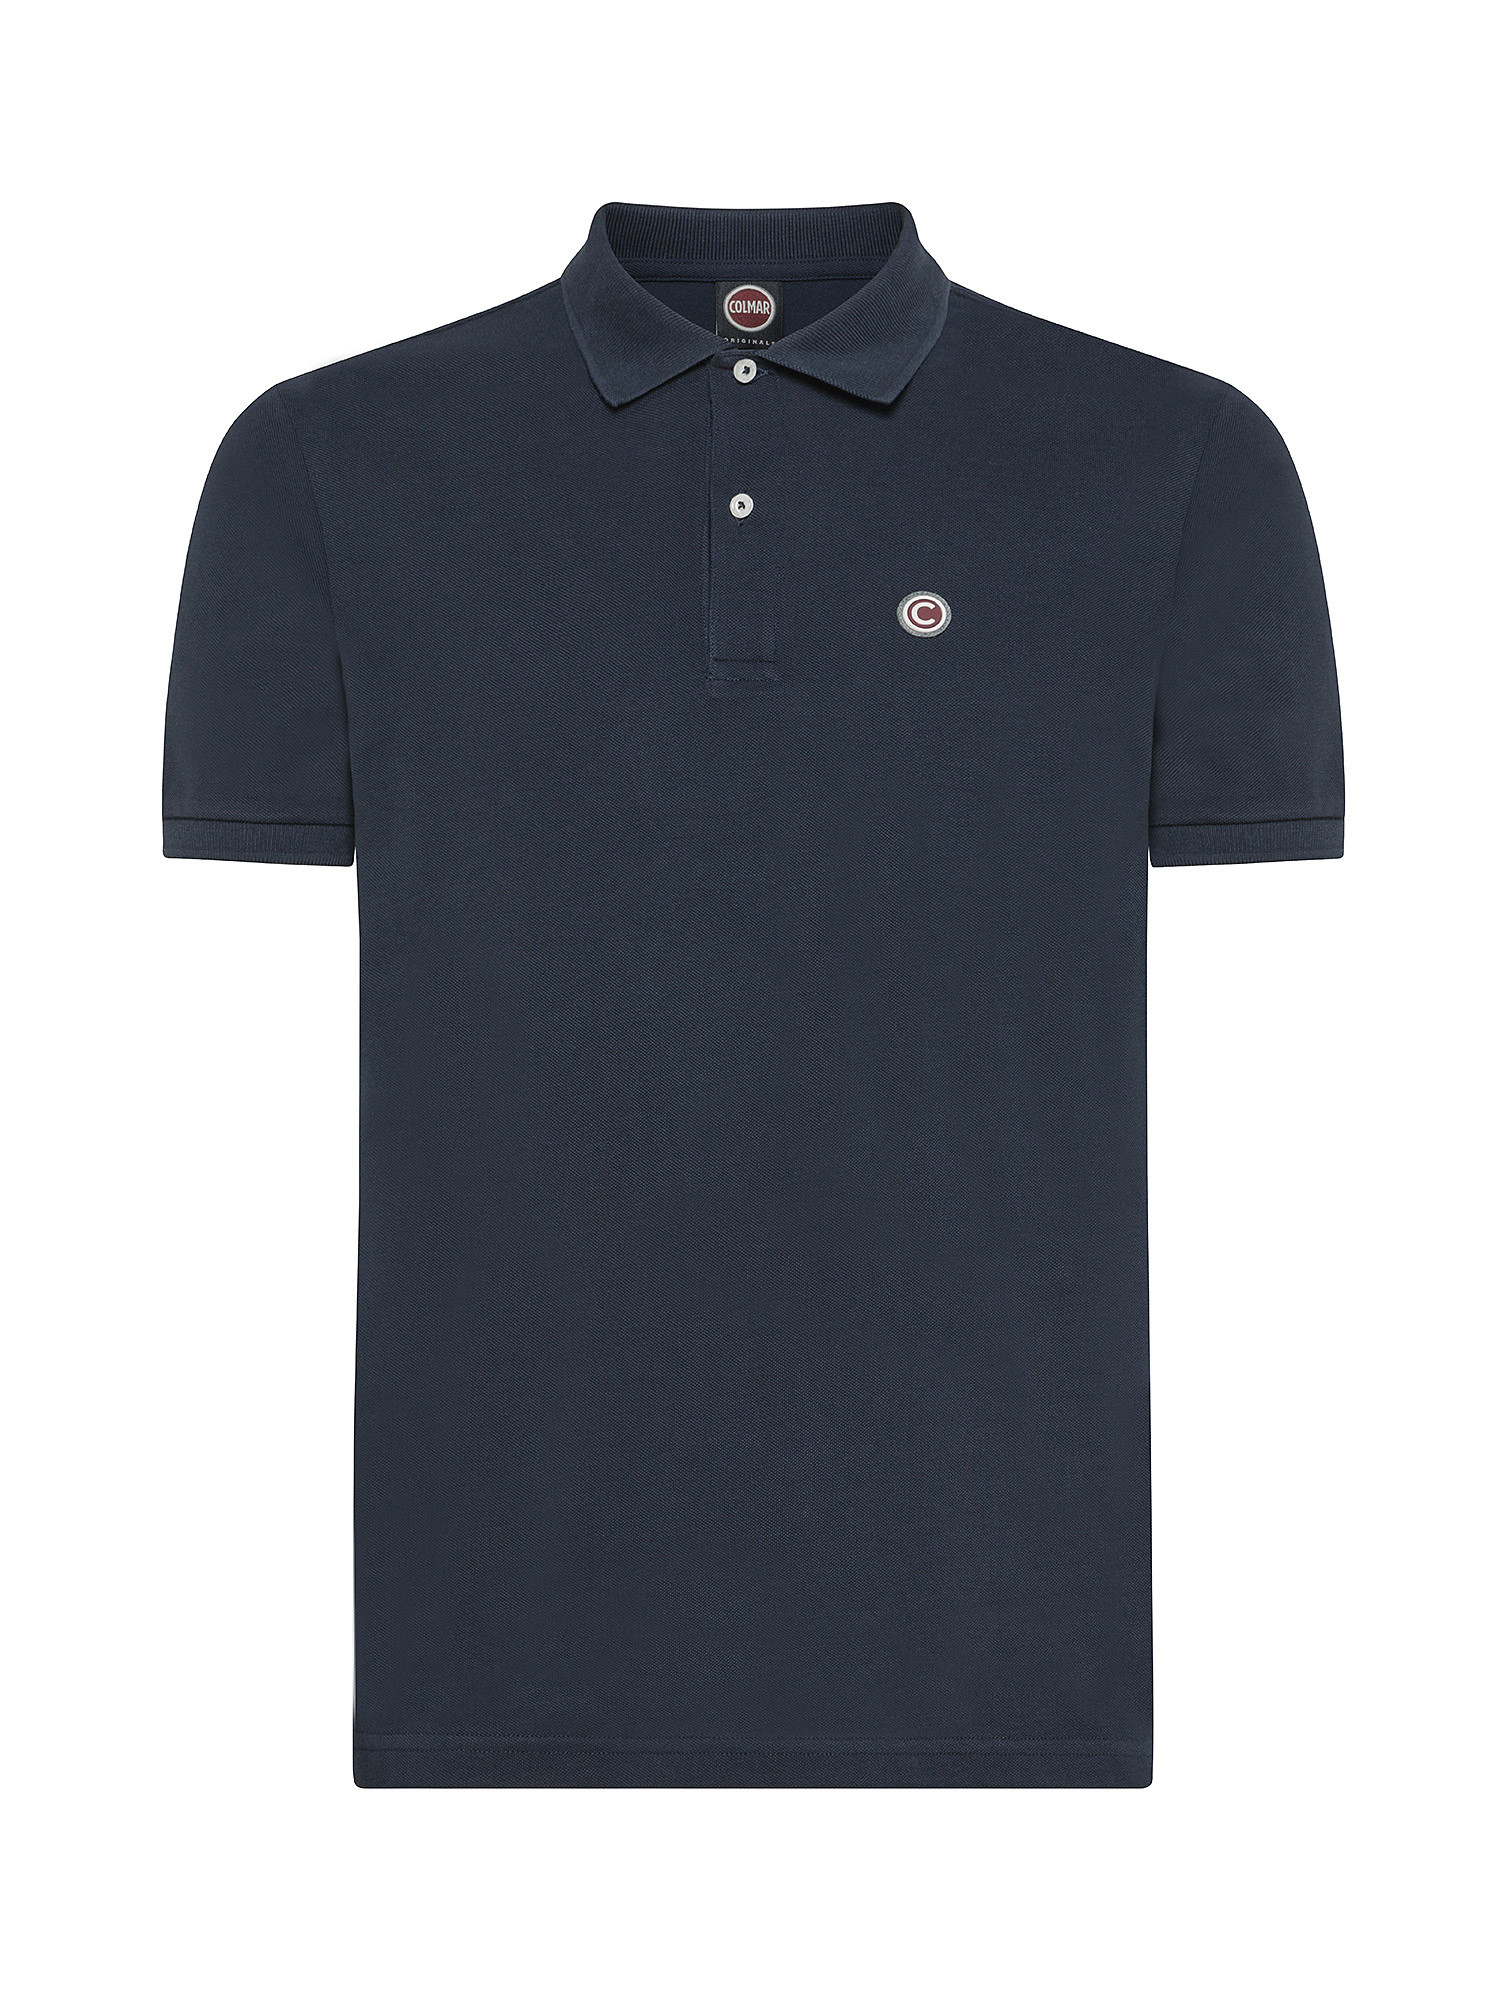 Colmar - Short-sleeved polo shirt in piqué cotton, Dark Blue, large image number 0